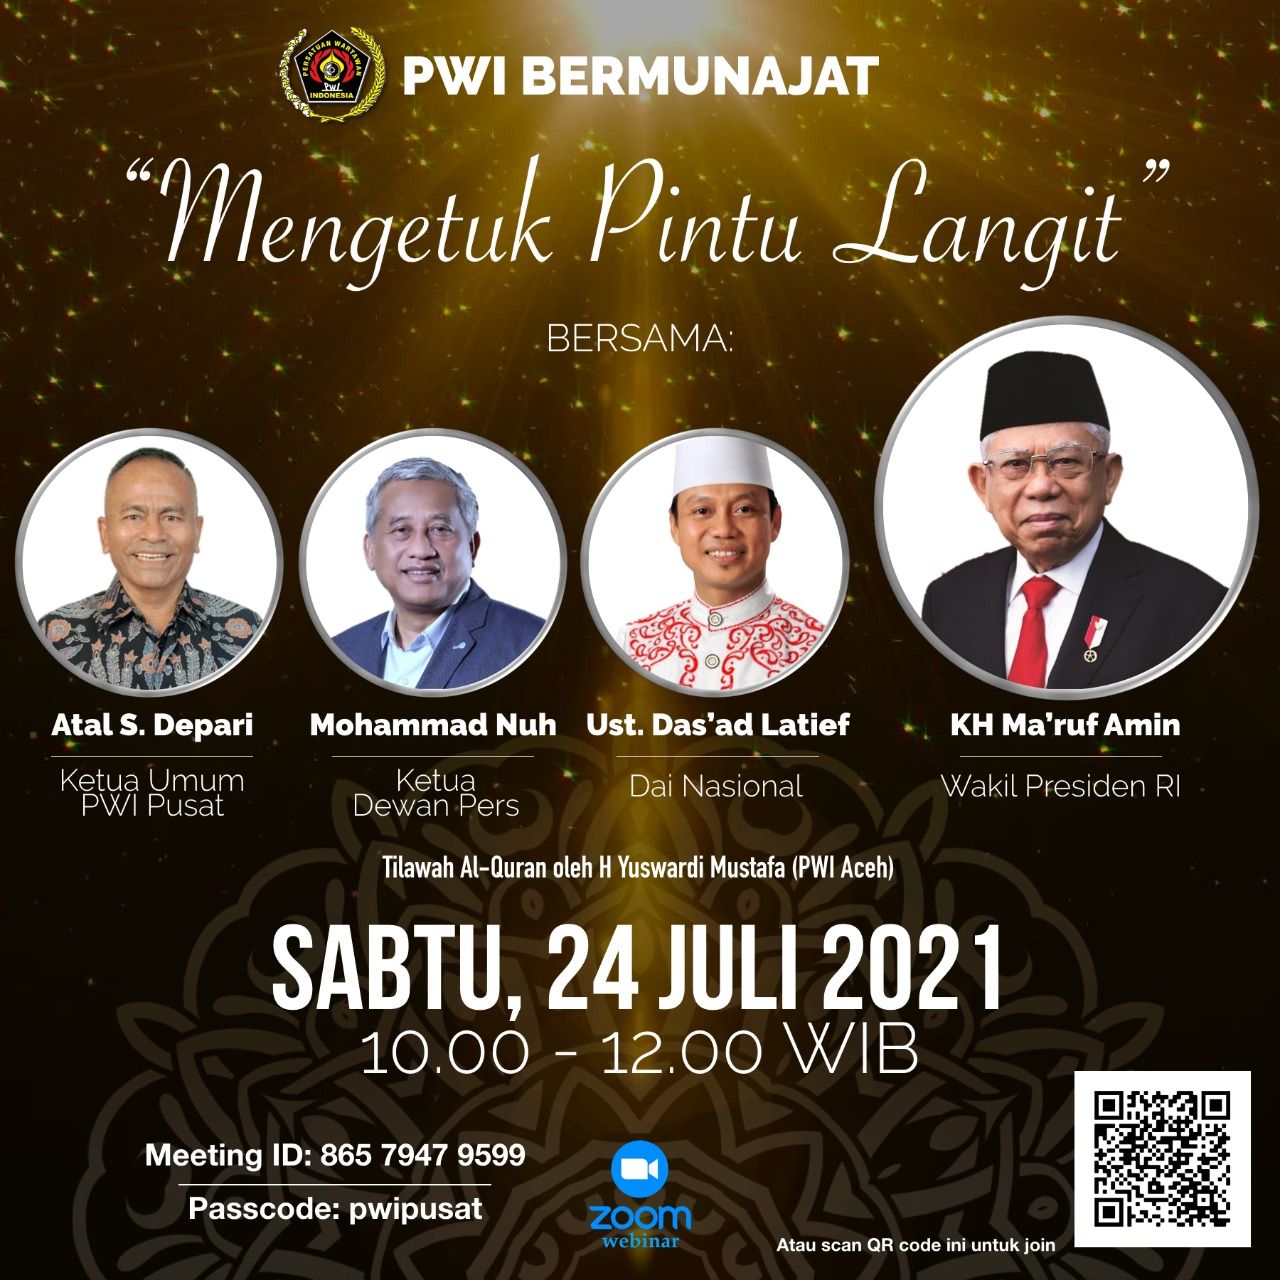 Persatuan Wartawan Indonesia (PWI) Pusat akan mengadakan PWI Bermunajat bersama pada Sabtu 24 Juli 2021.